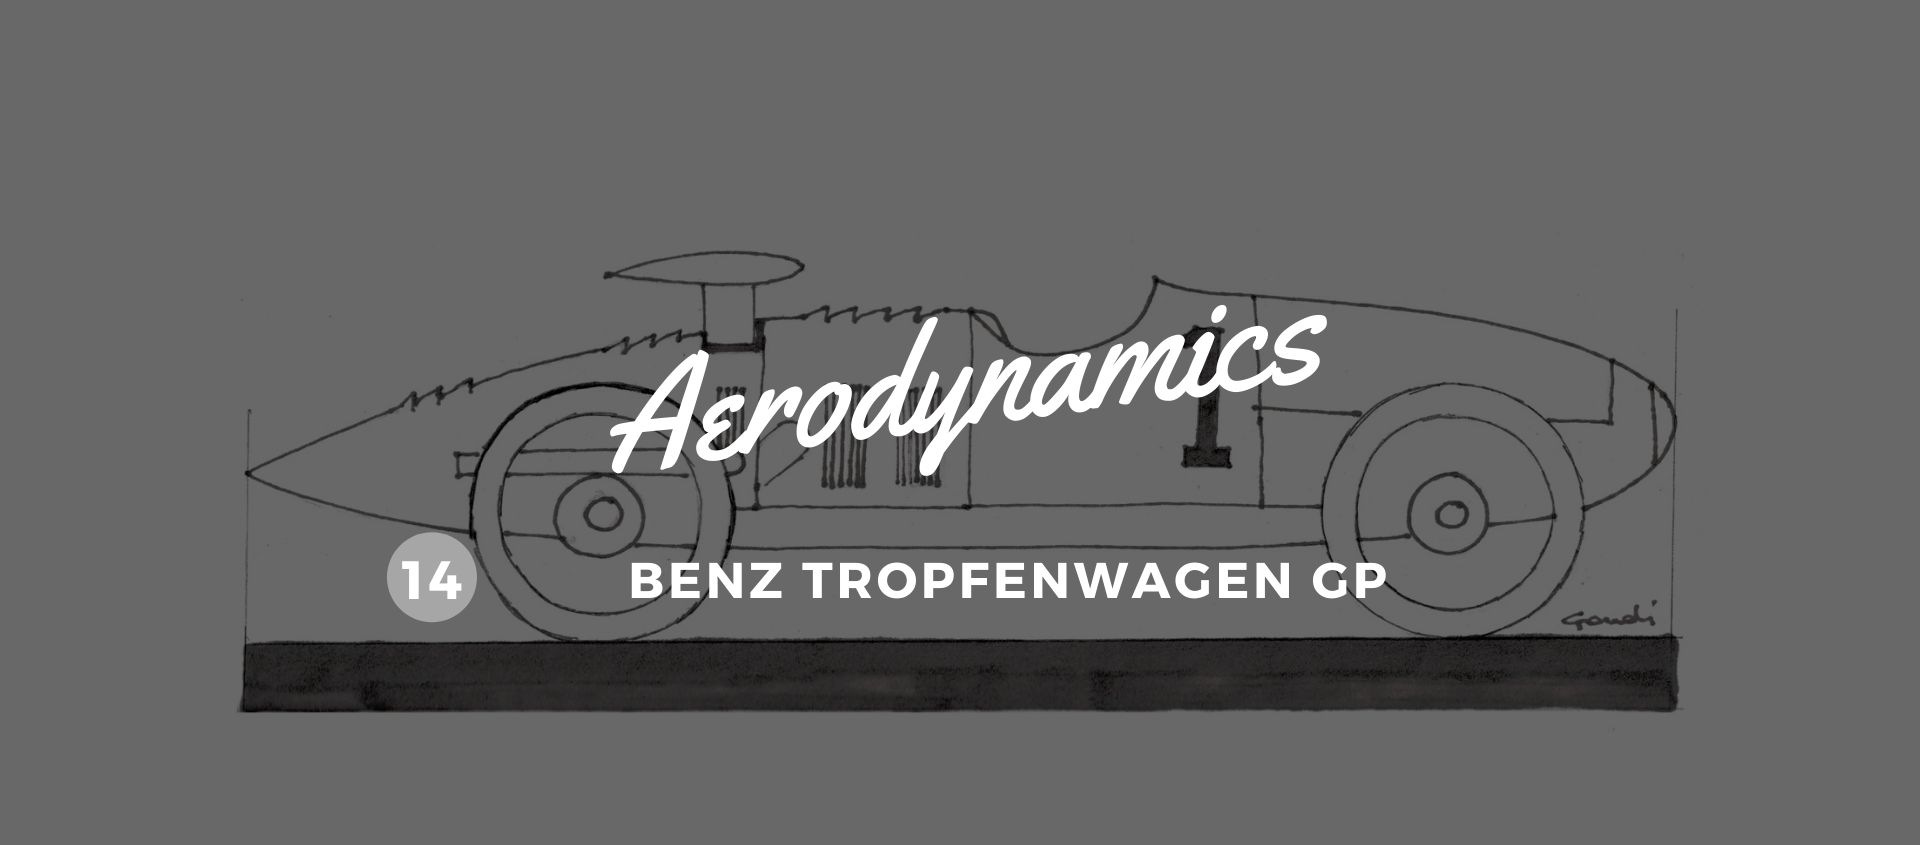 1923. Benz Tropfenwagen GP. The first Silver Arrow image